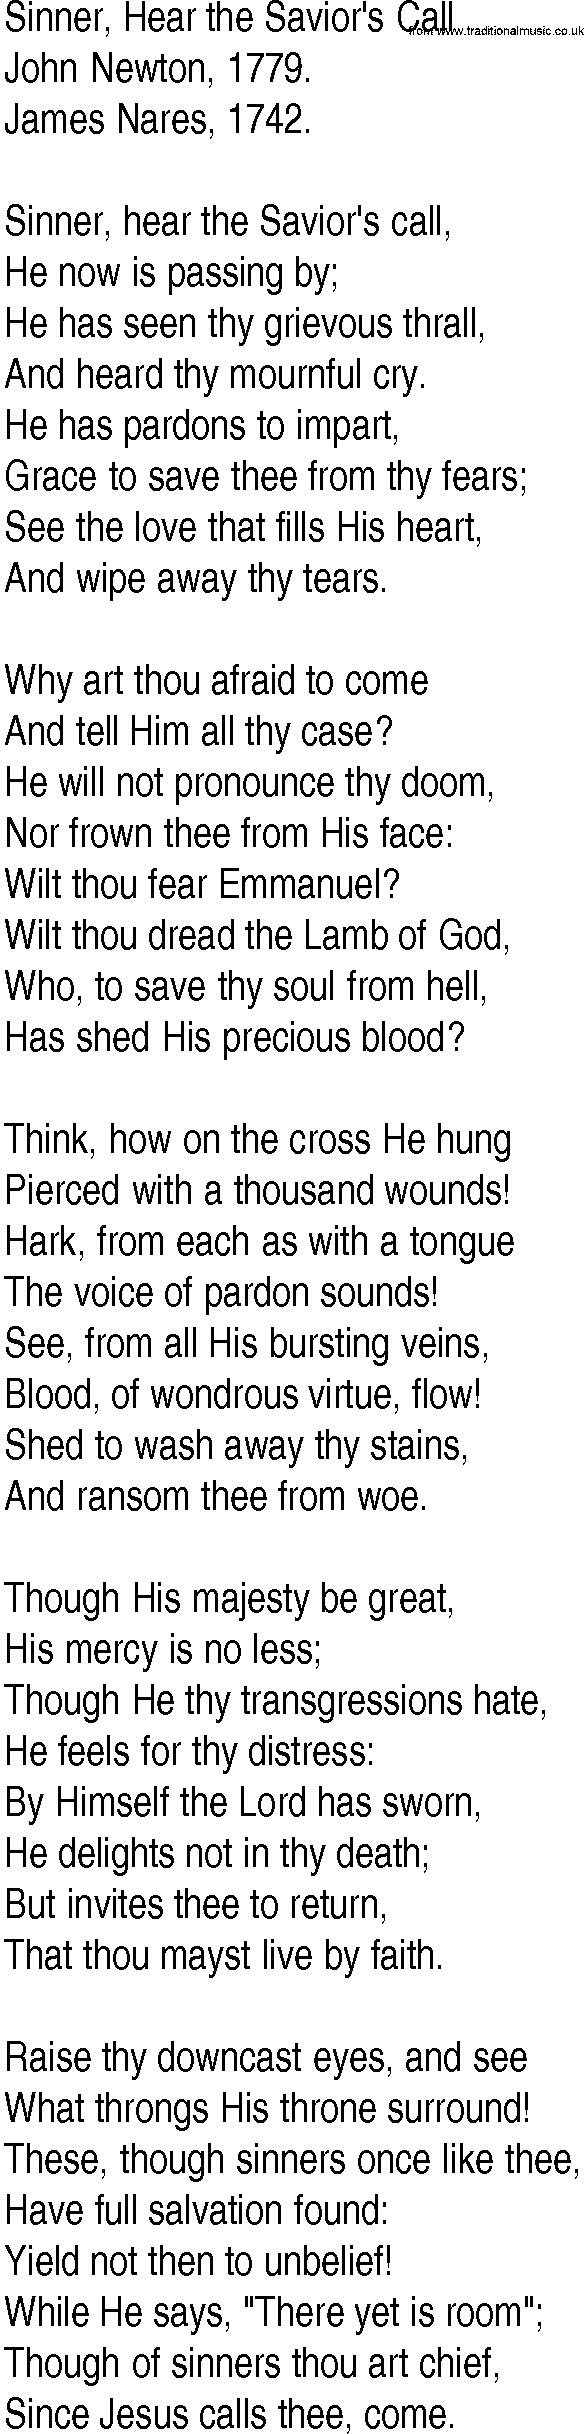 Hymn and Gospel Song: Sinner, Hear the Savior's Call by John Newton lyrics